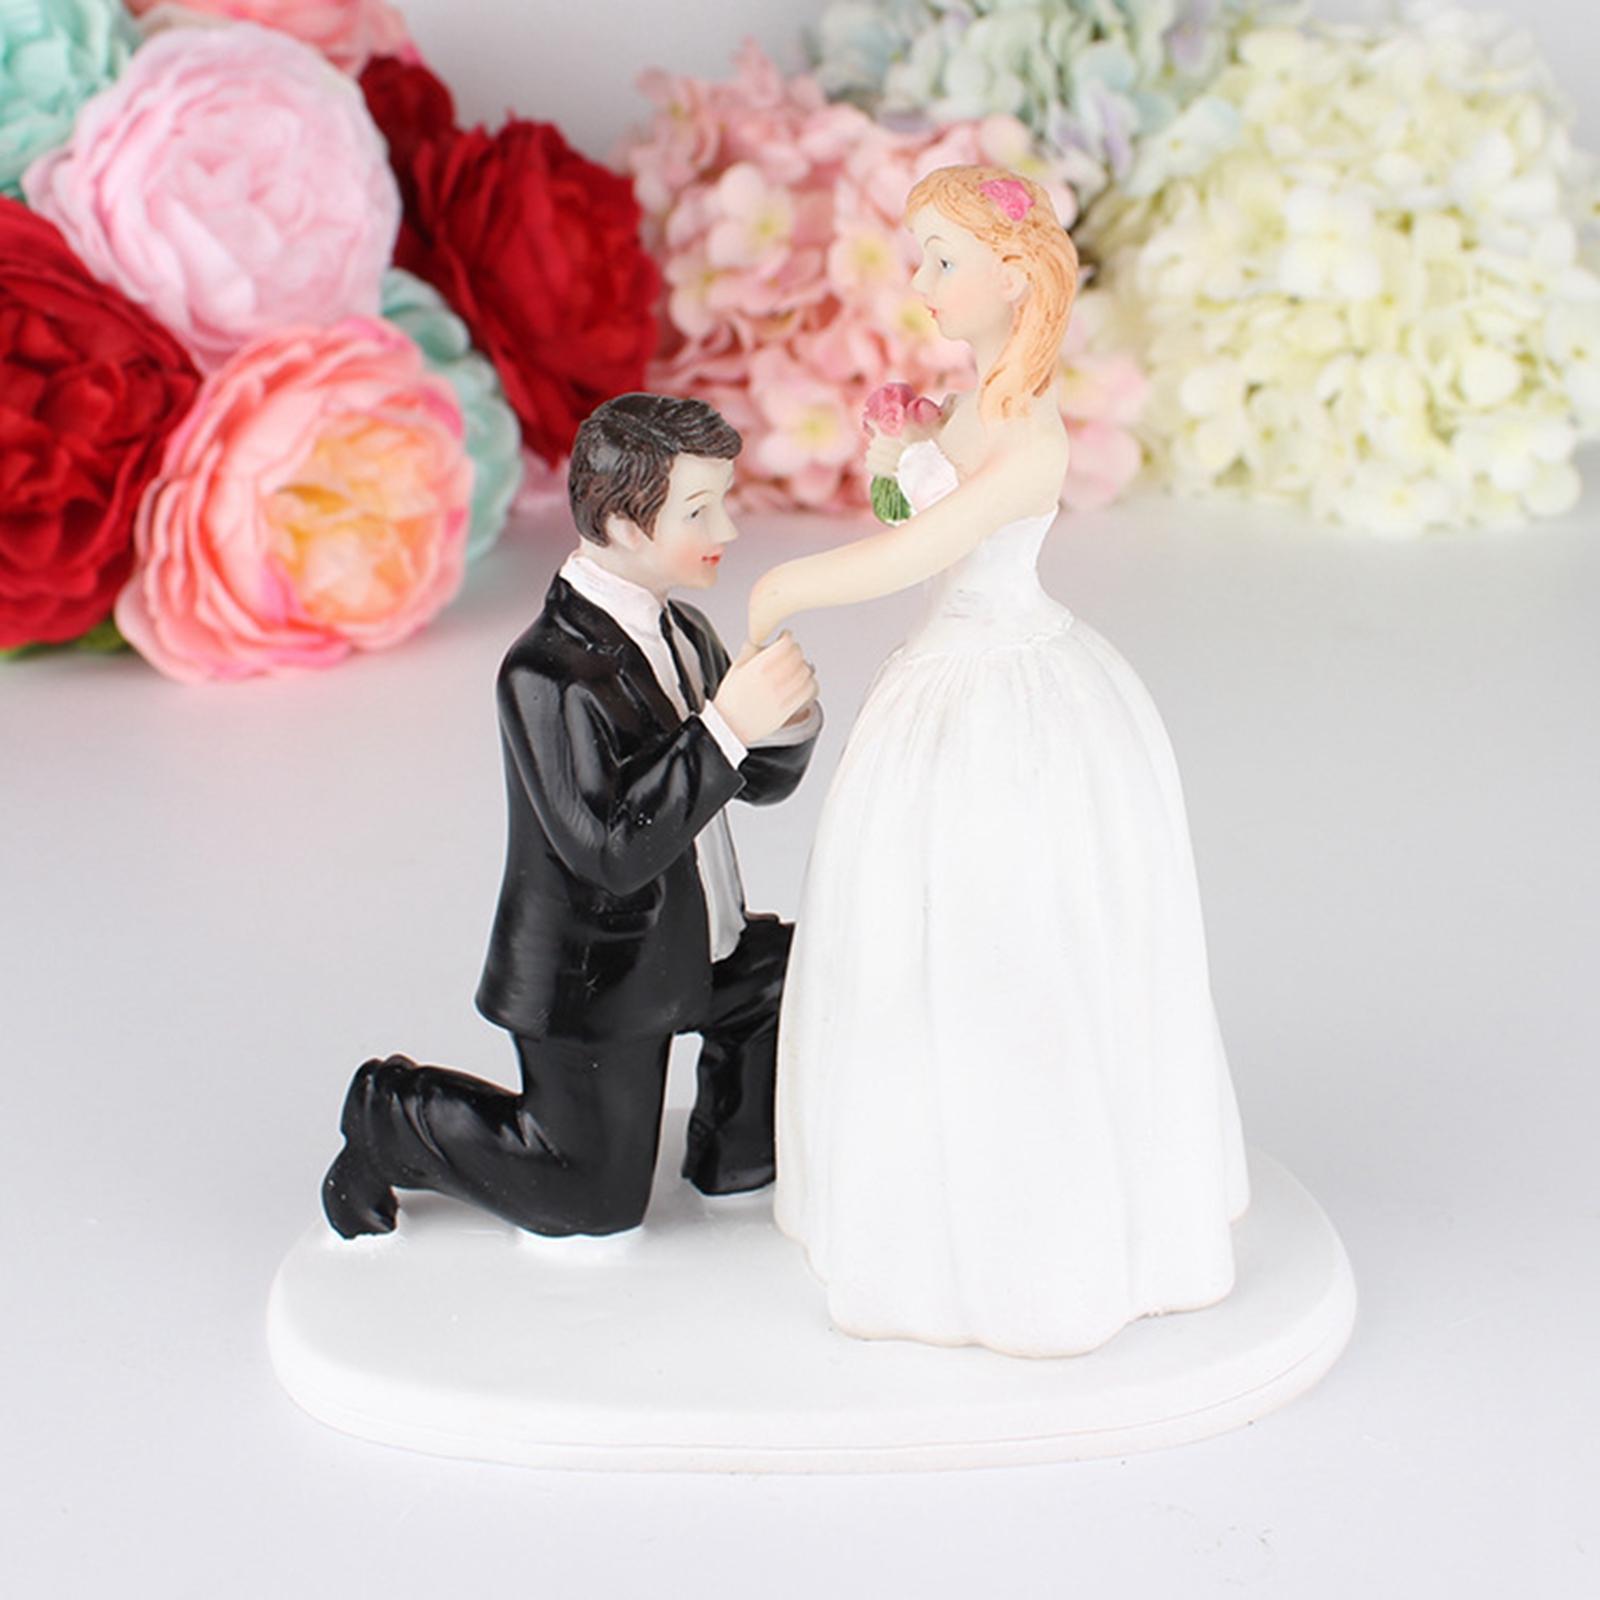 Rustic Wedding Cake Topper Bride and Groom Figurines Keepsake Cake Decoration Ornament Wedding Cake Dolls Topper for Birthday